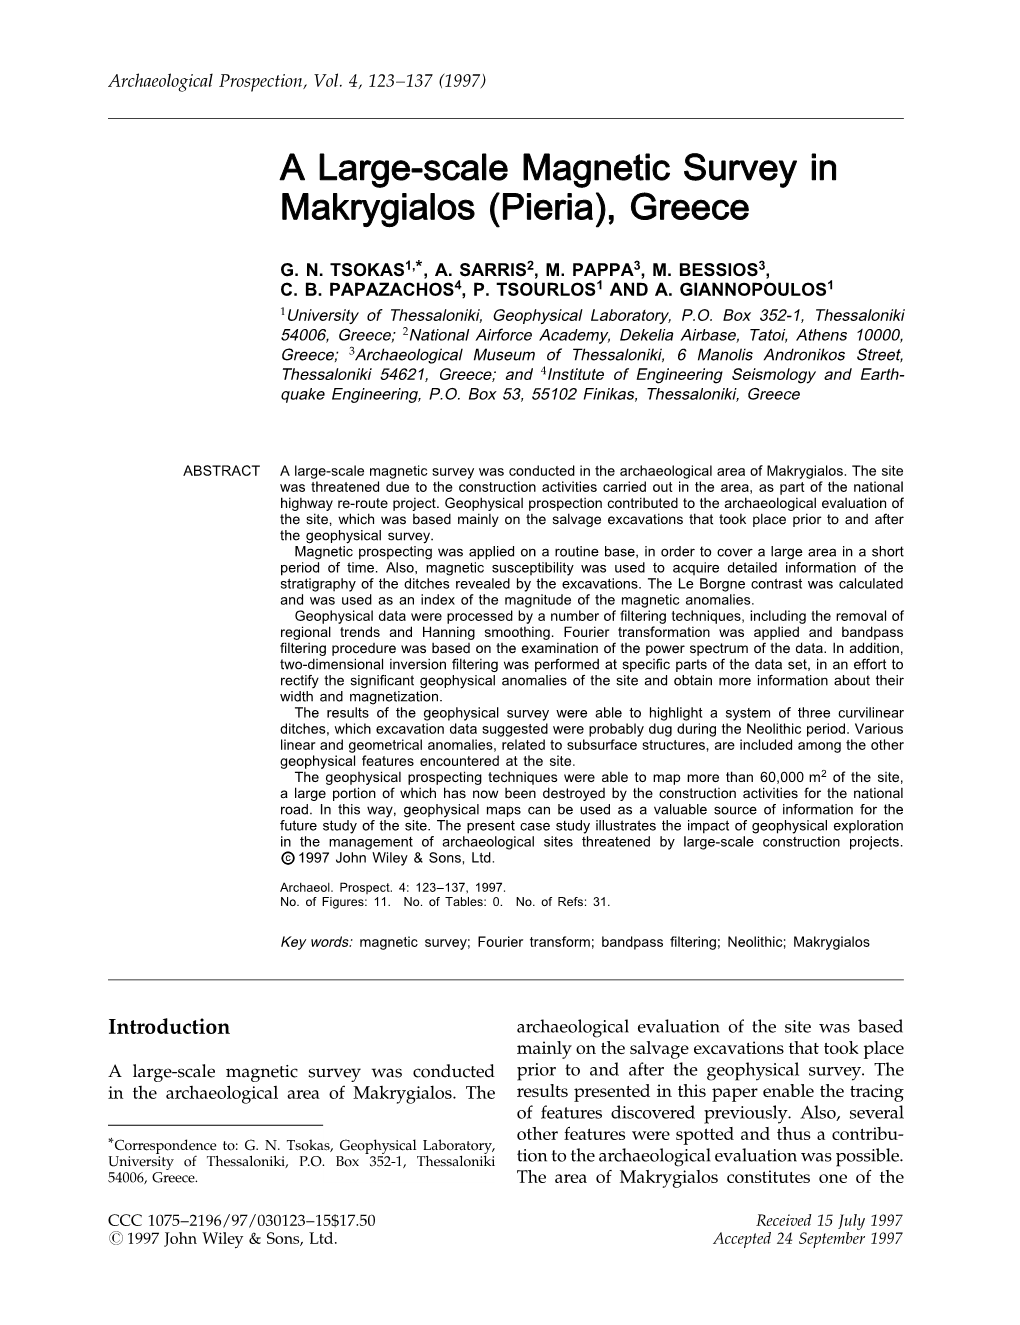 A Large-Scale Magnetic Survey in Makrygialos (Pieria), Greece